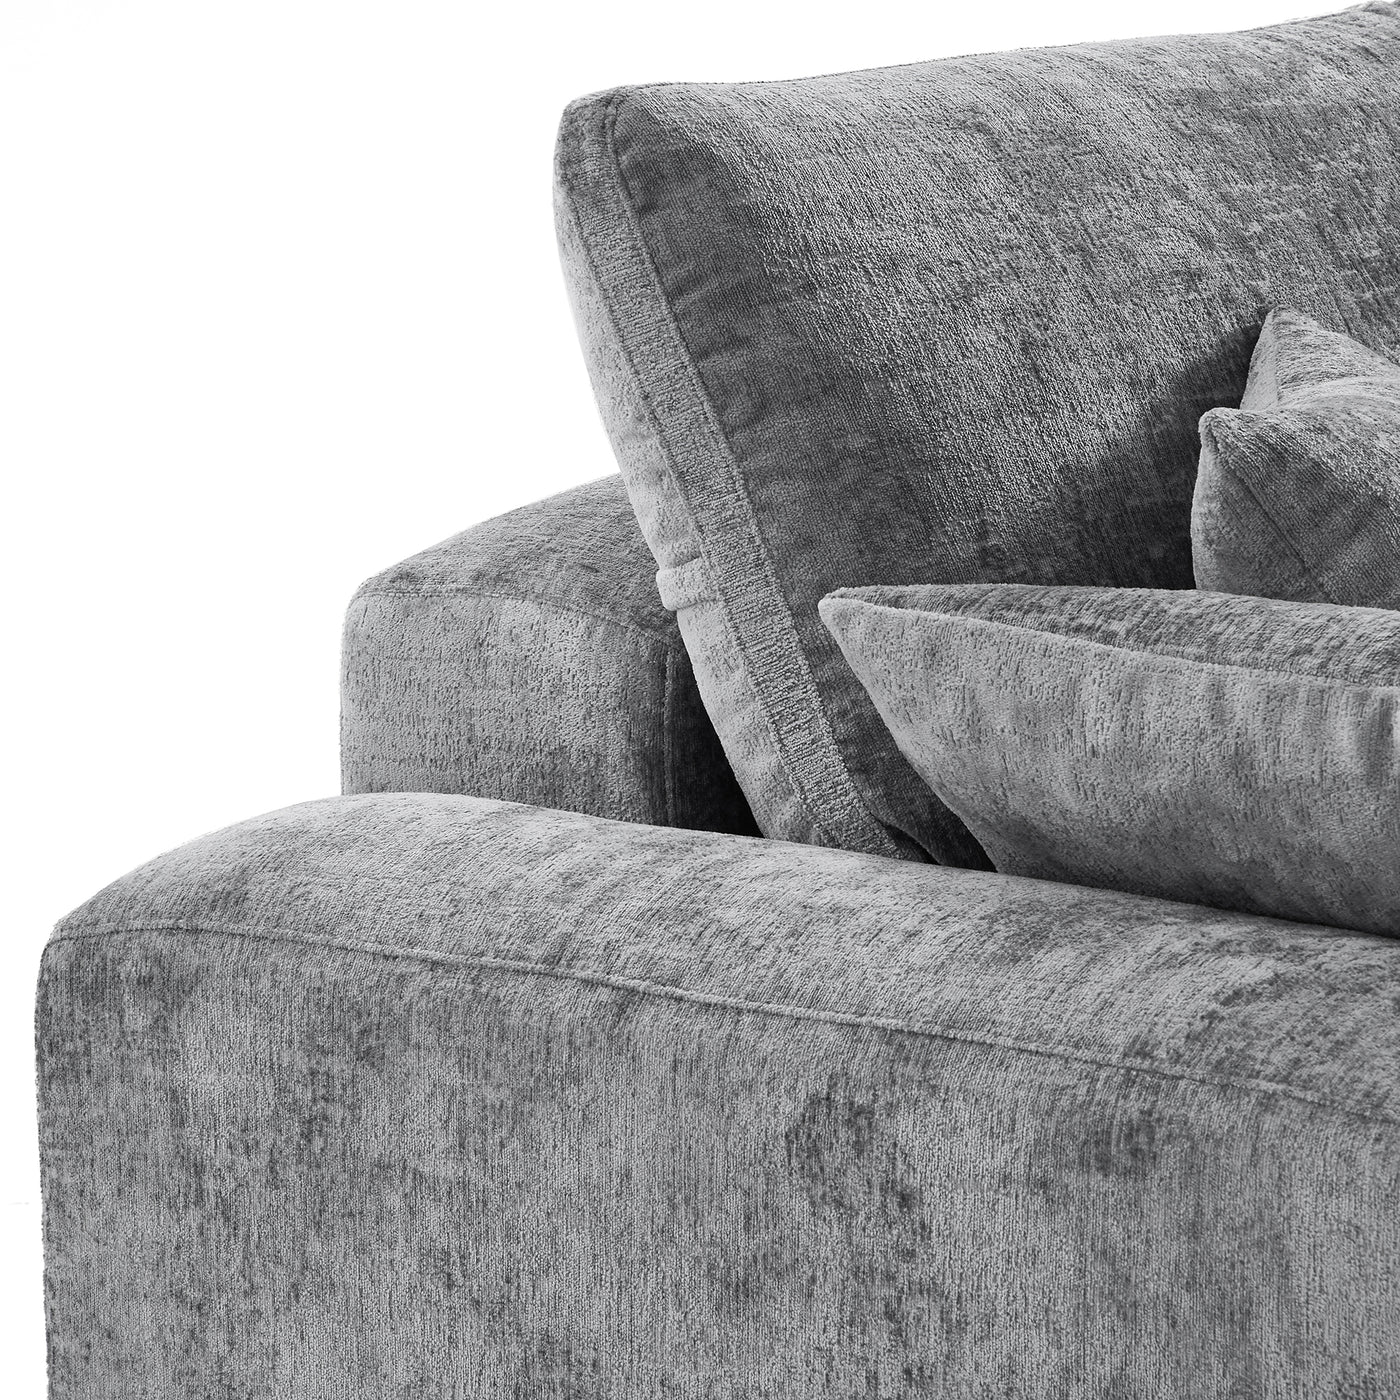 The Empress Beige Corner Sectional Sofa-Gray